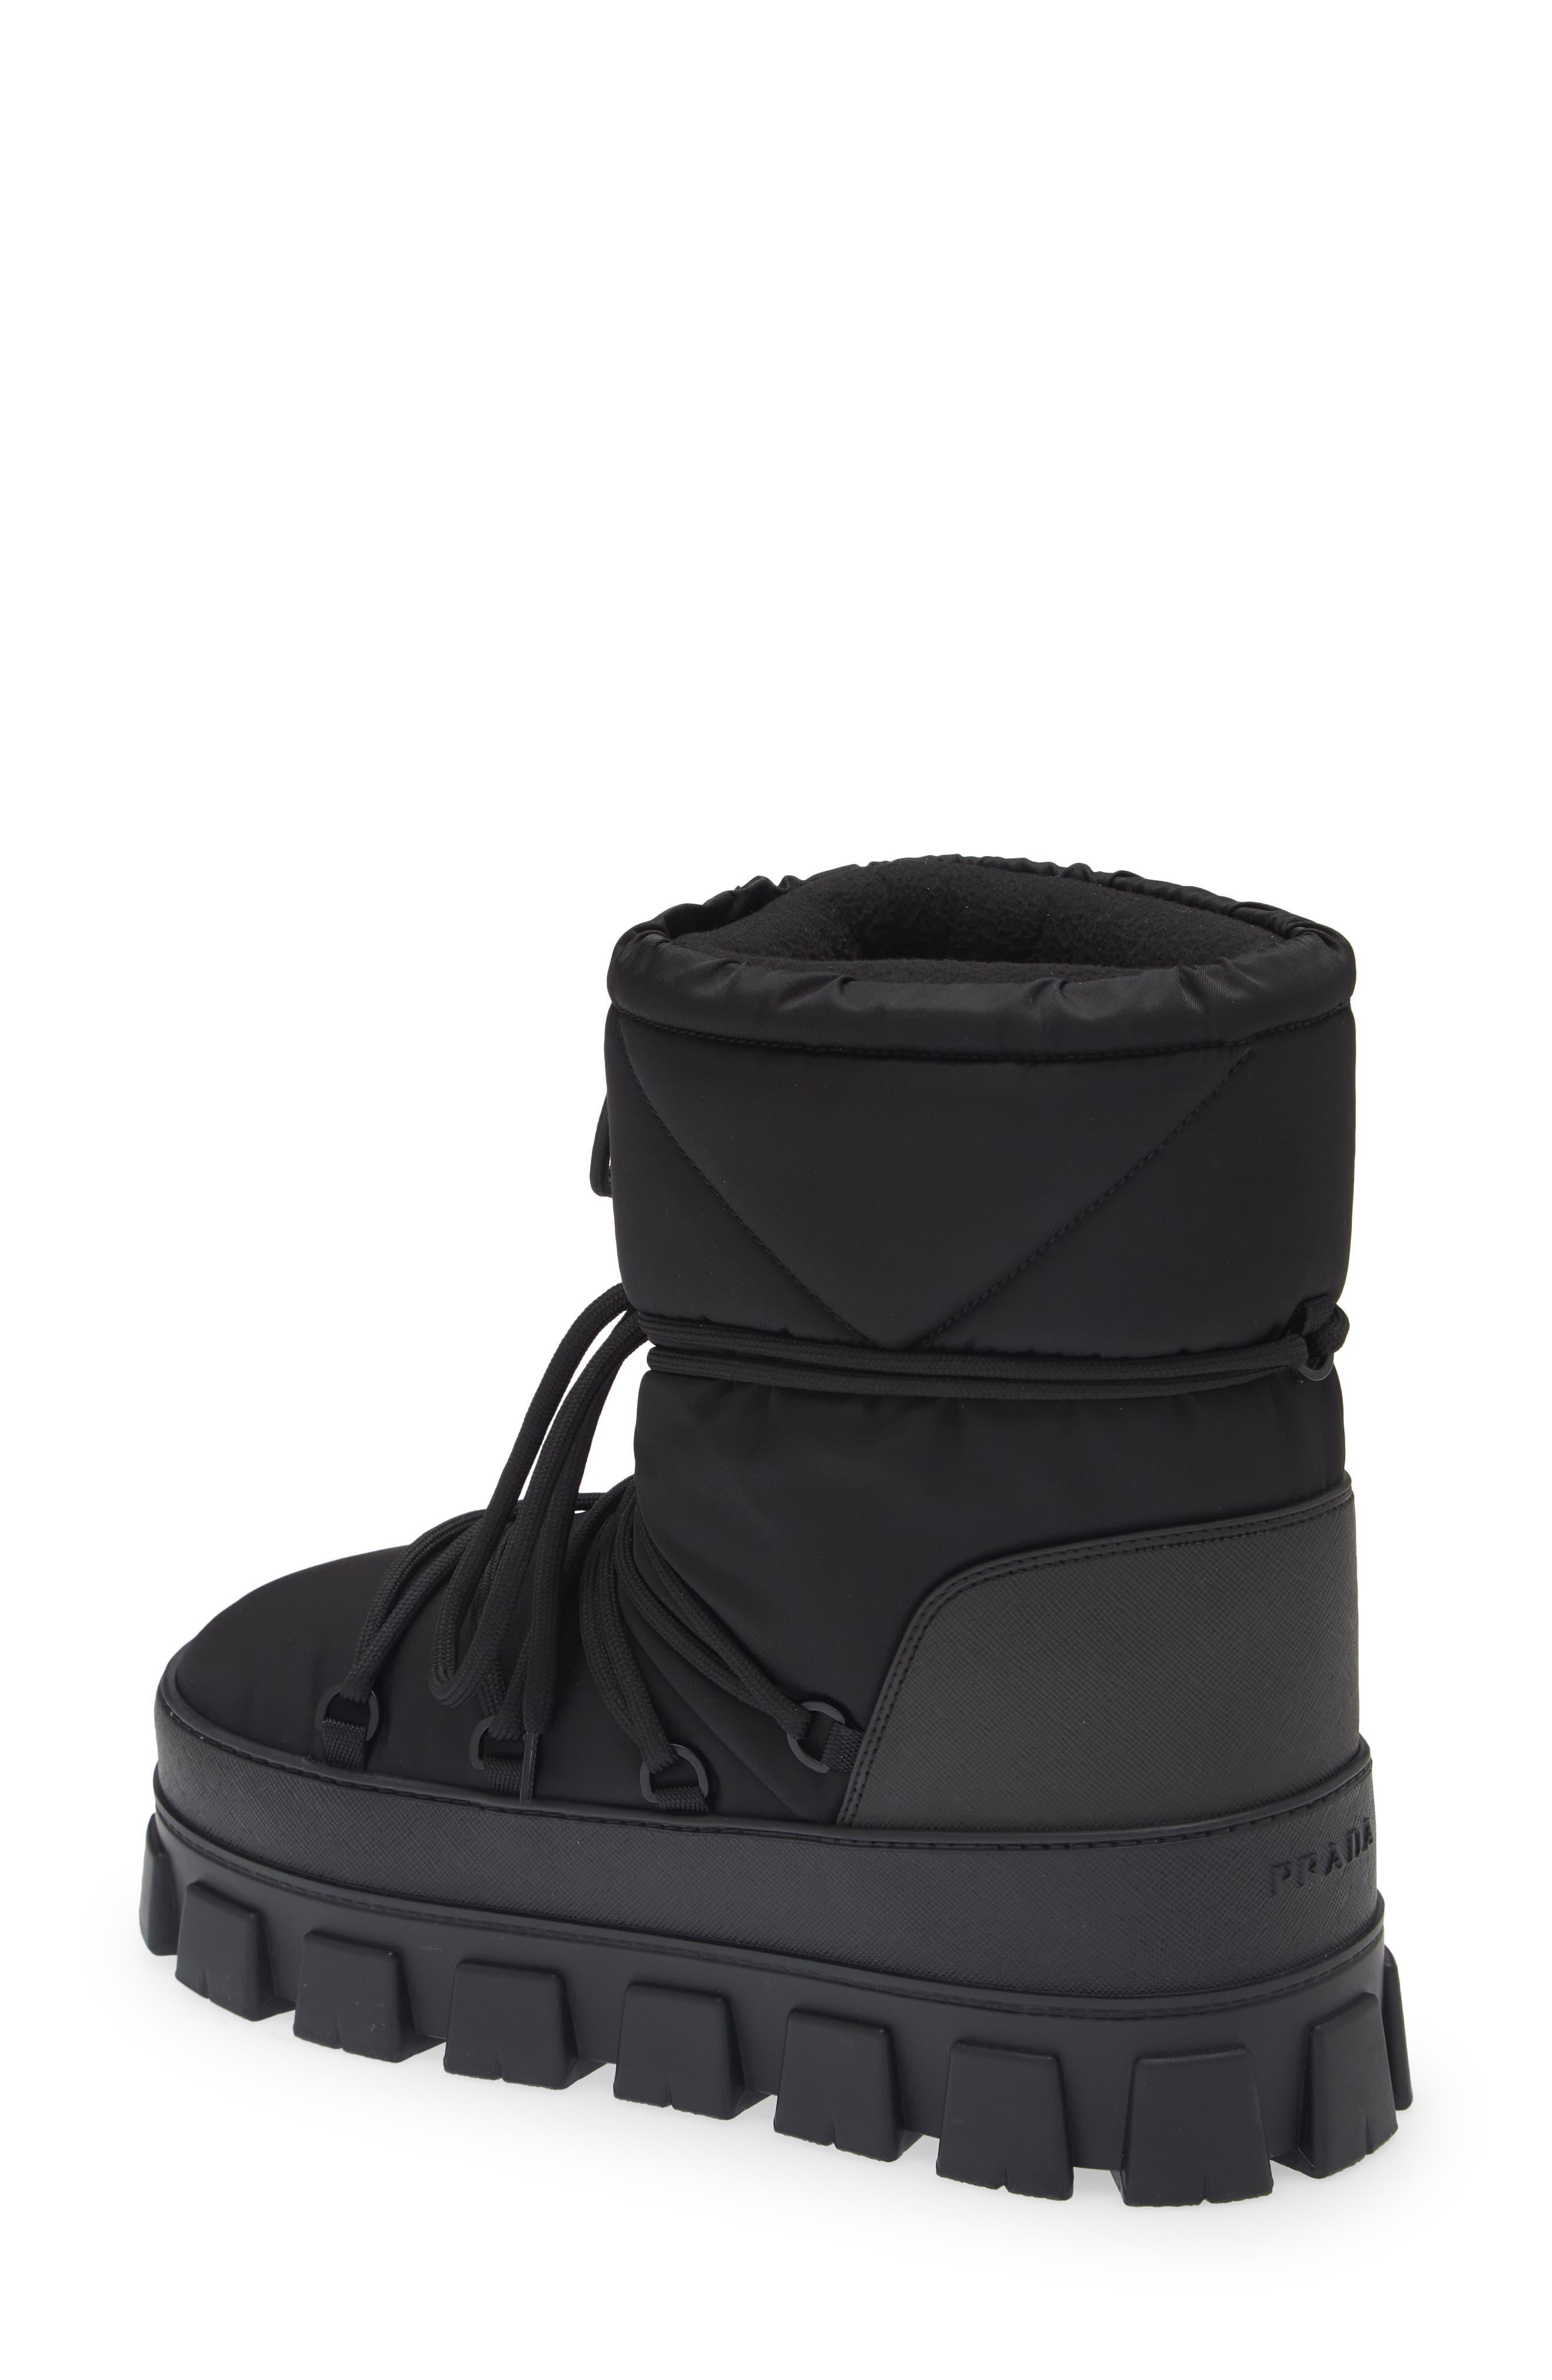 Black Padded Re-Nylon snow boots, Prada